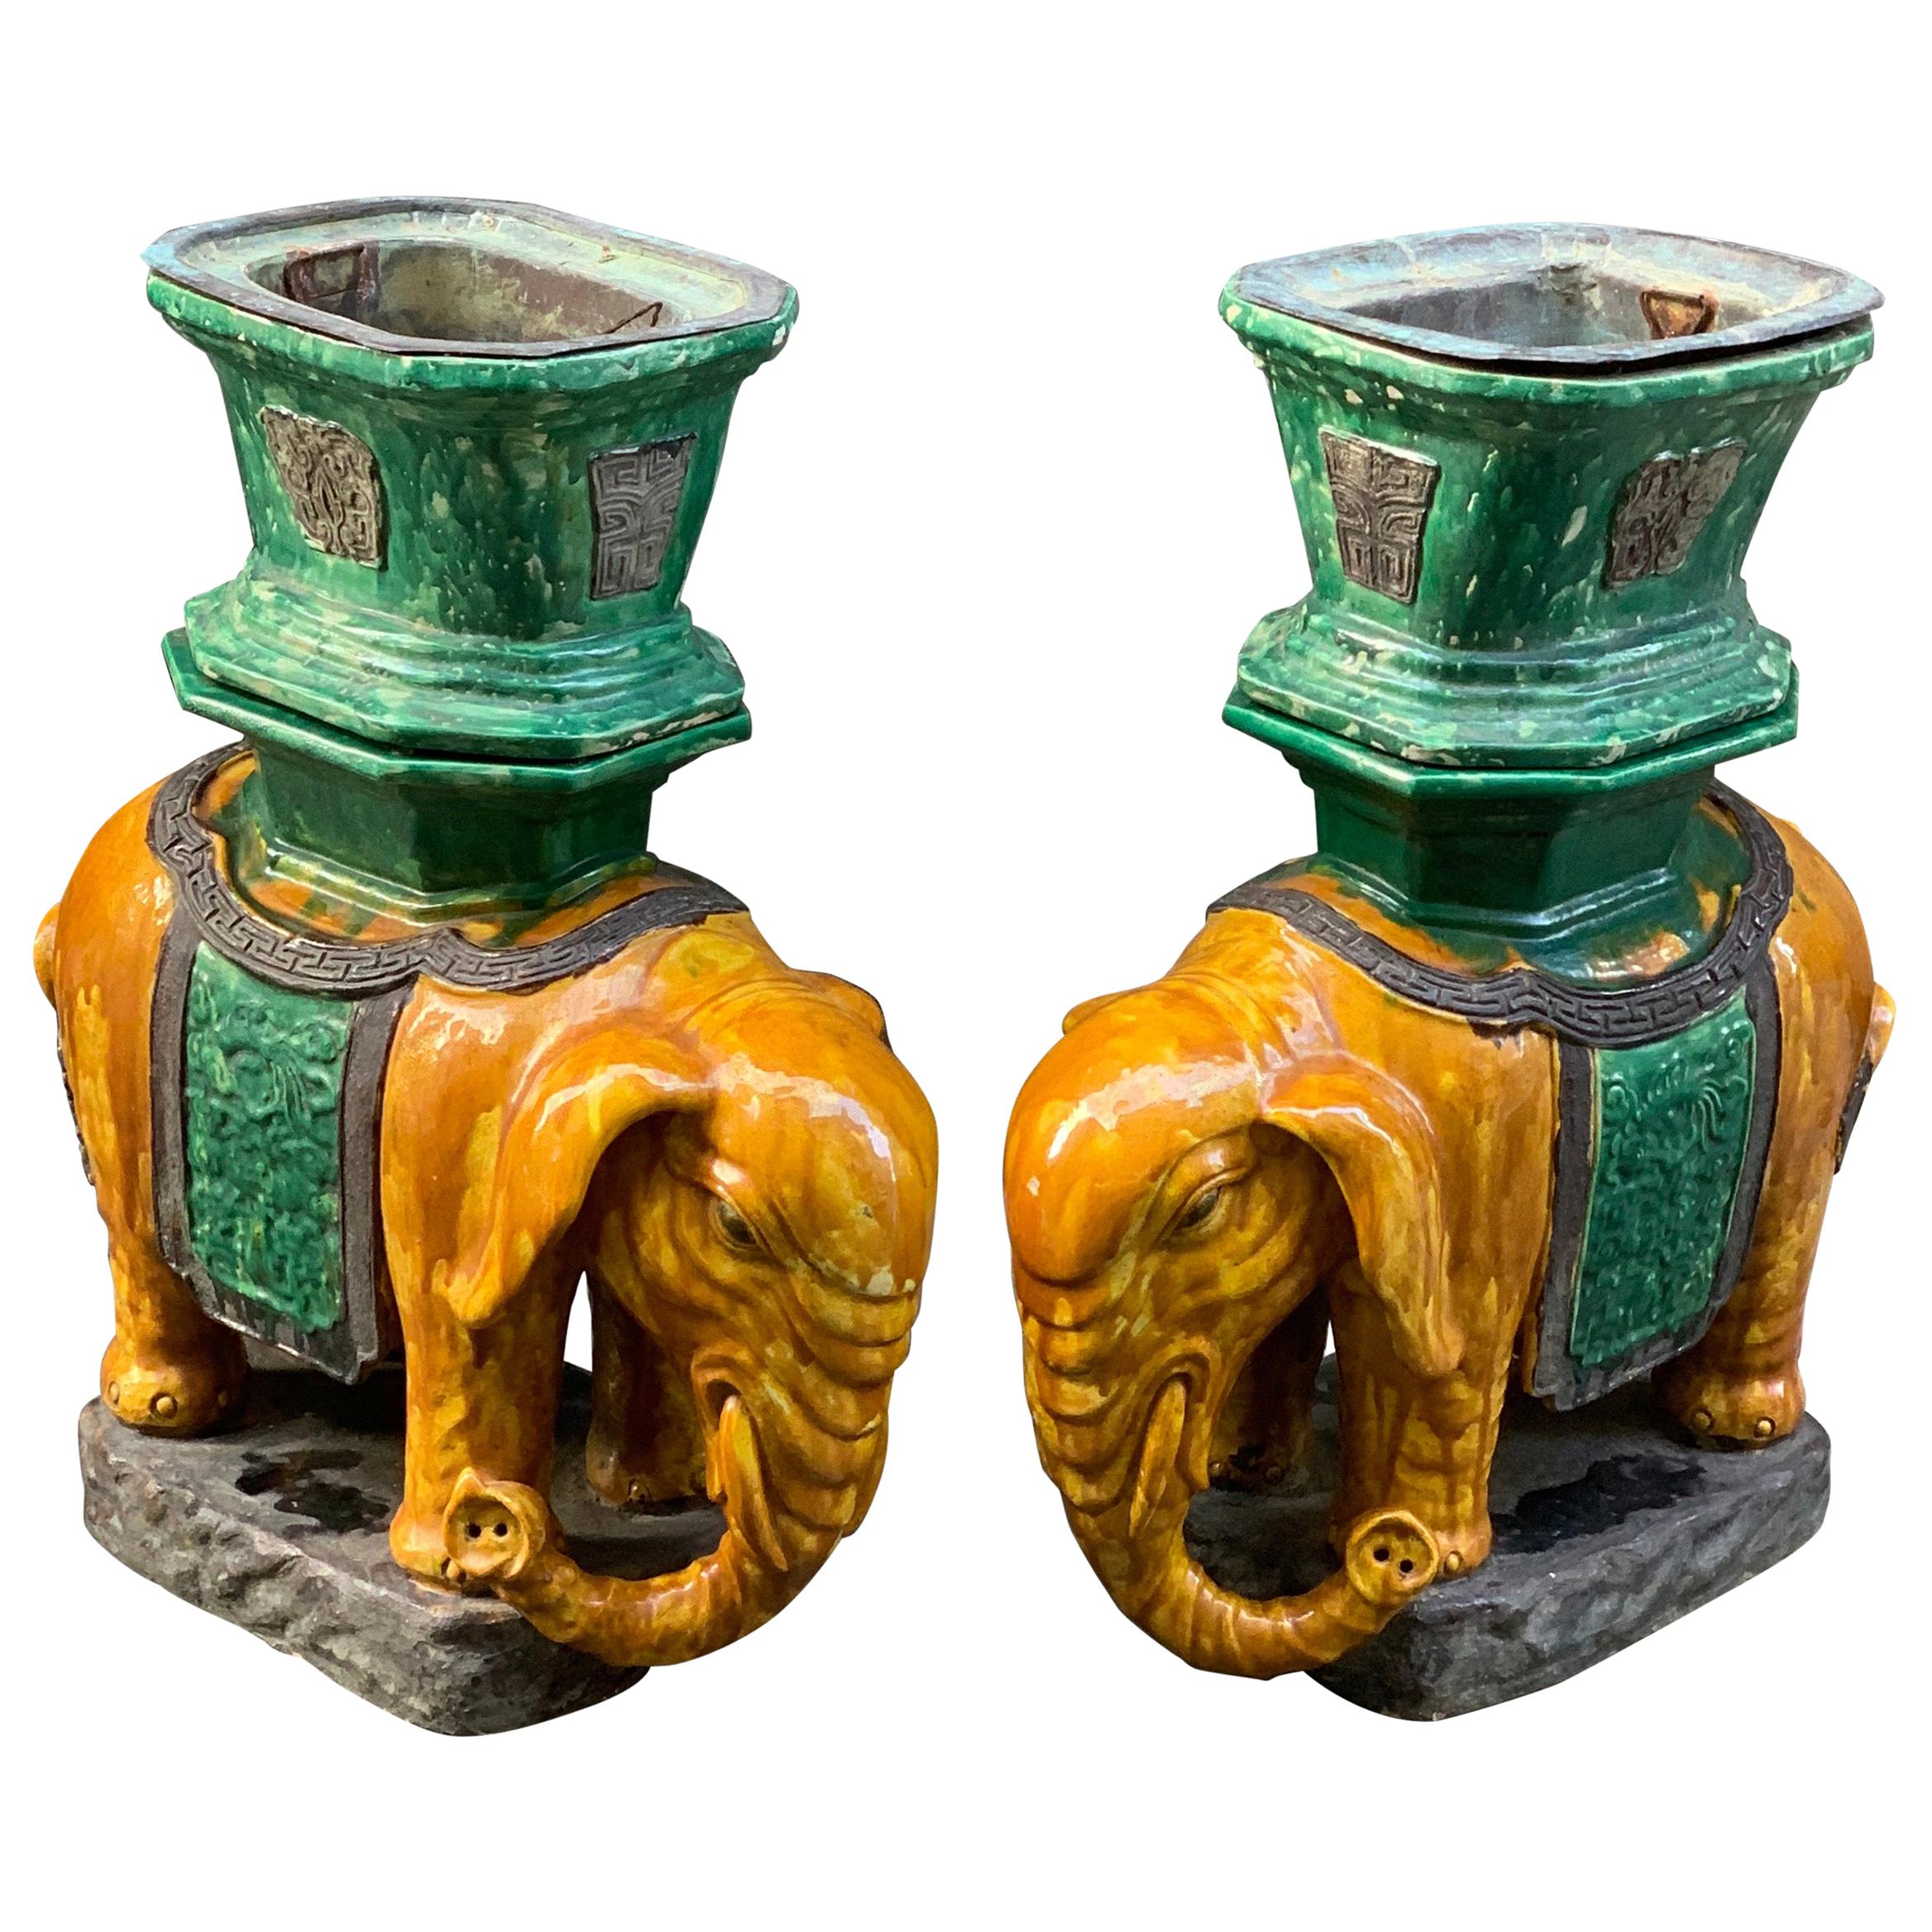 Pair of Antique Vietnamese Ceramic Elephant Stools/Plant Holders, Early 1900